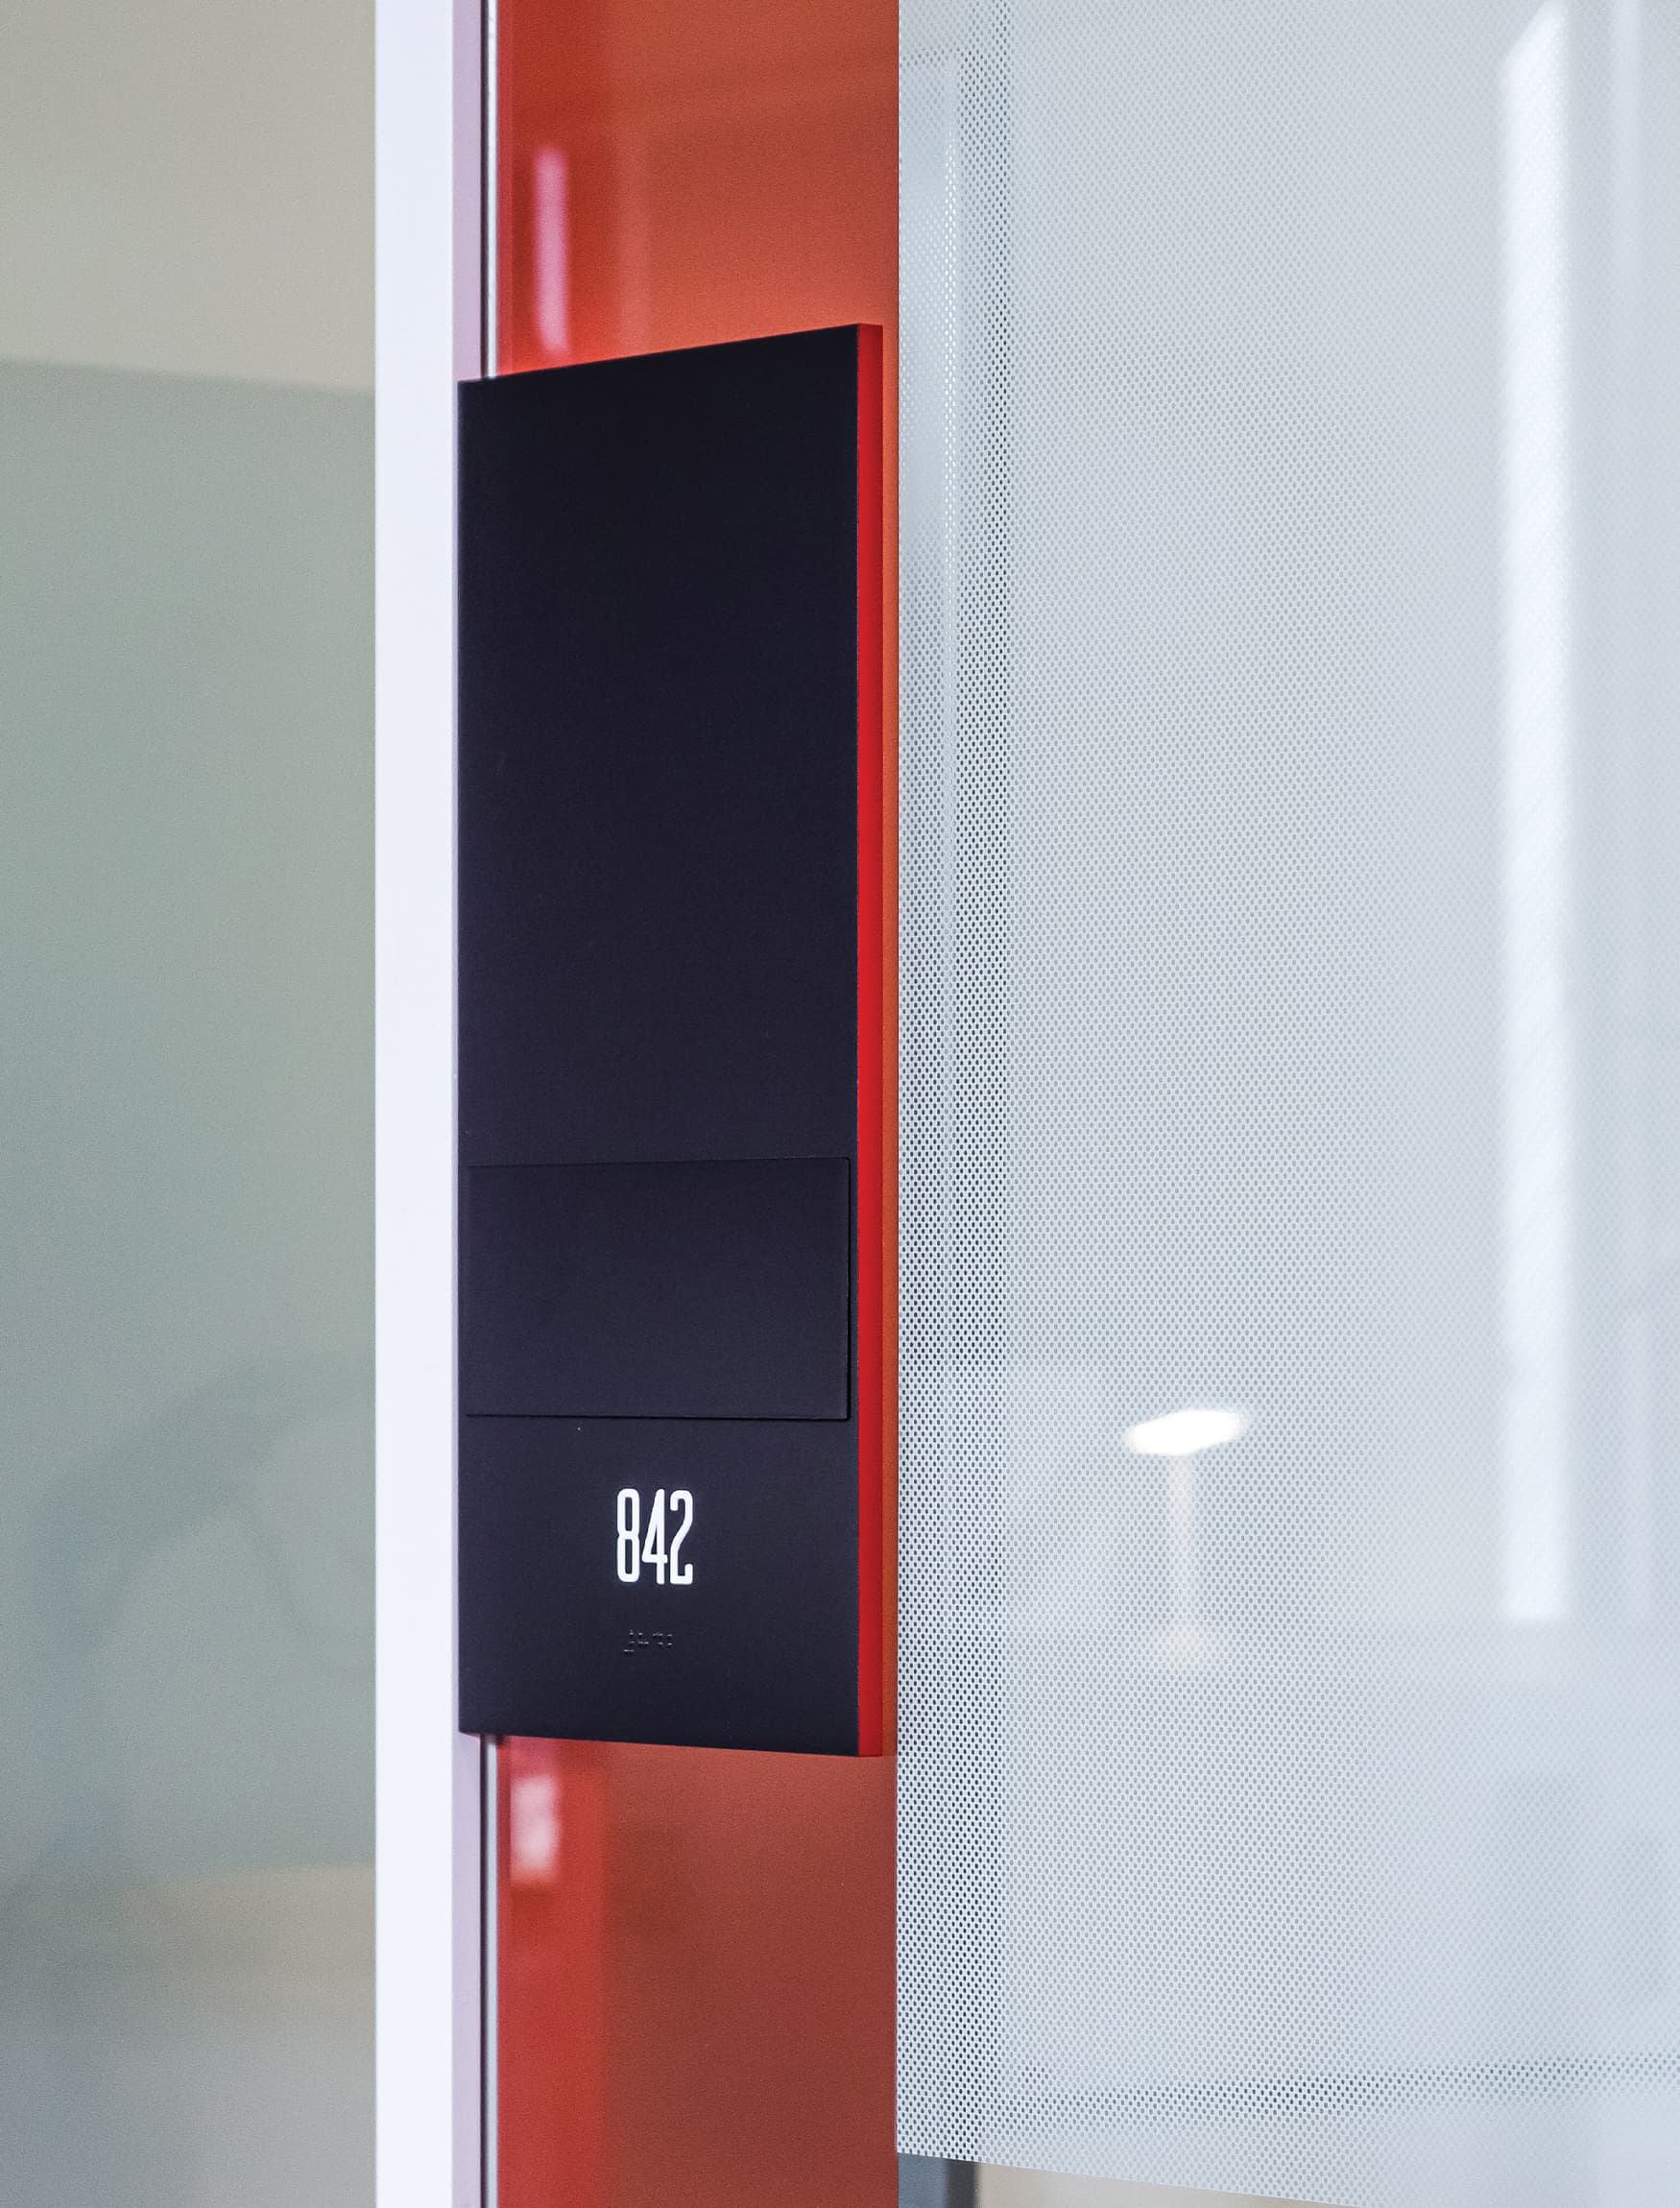 Doorway vertical signage for Chemonics International by RSM Design. Red and black signage.